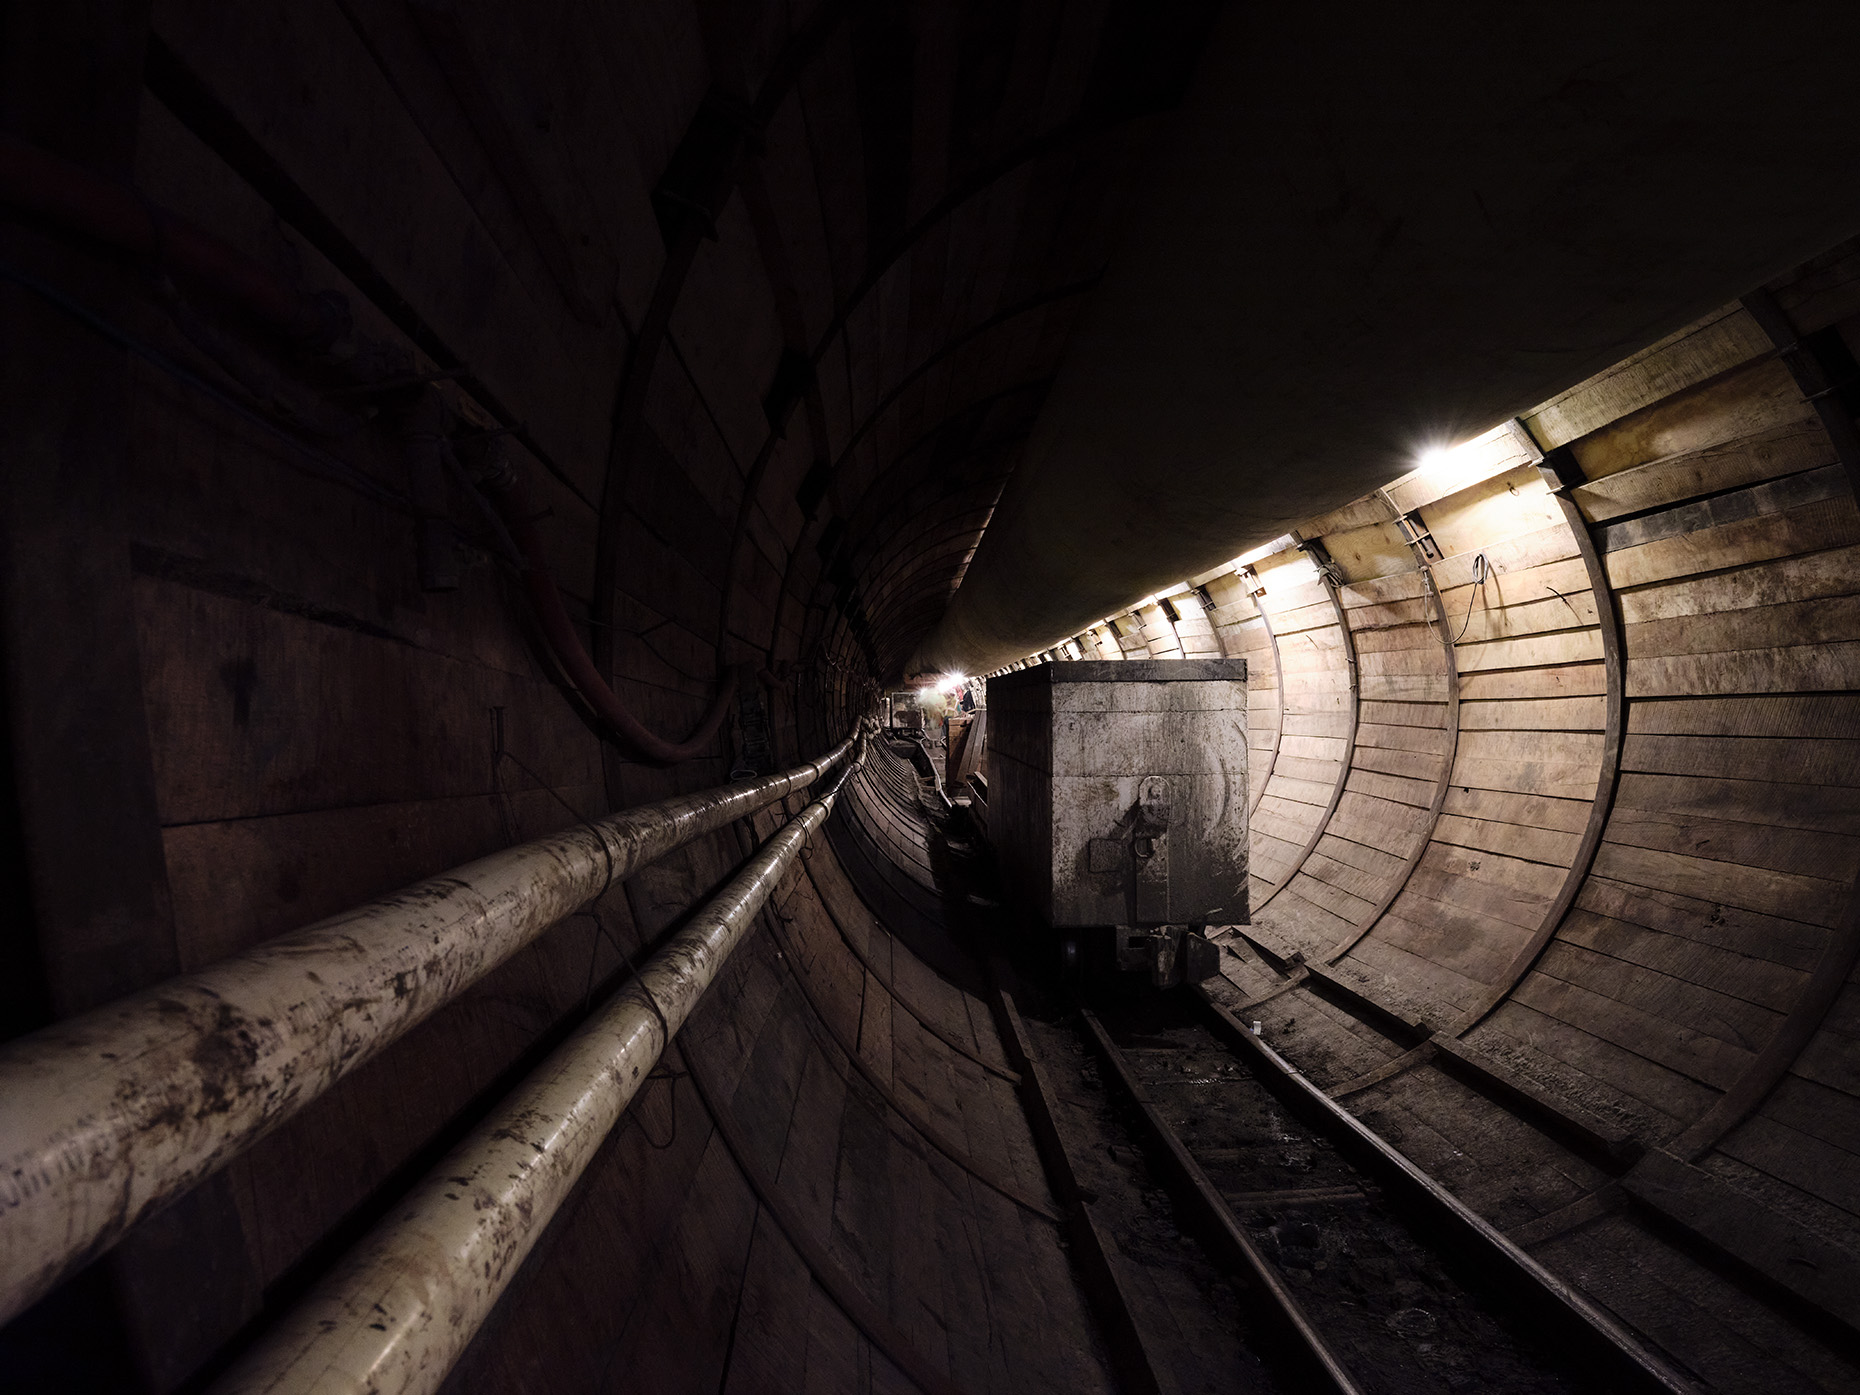 New water treament tunnel in San Antonio, Texas